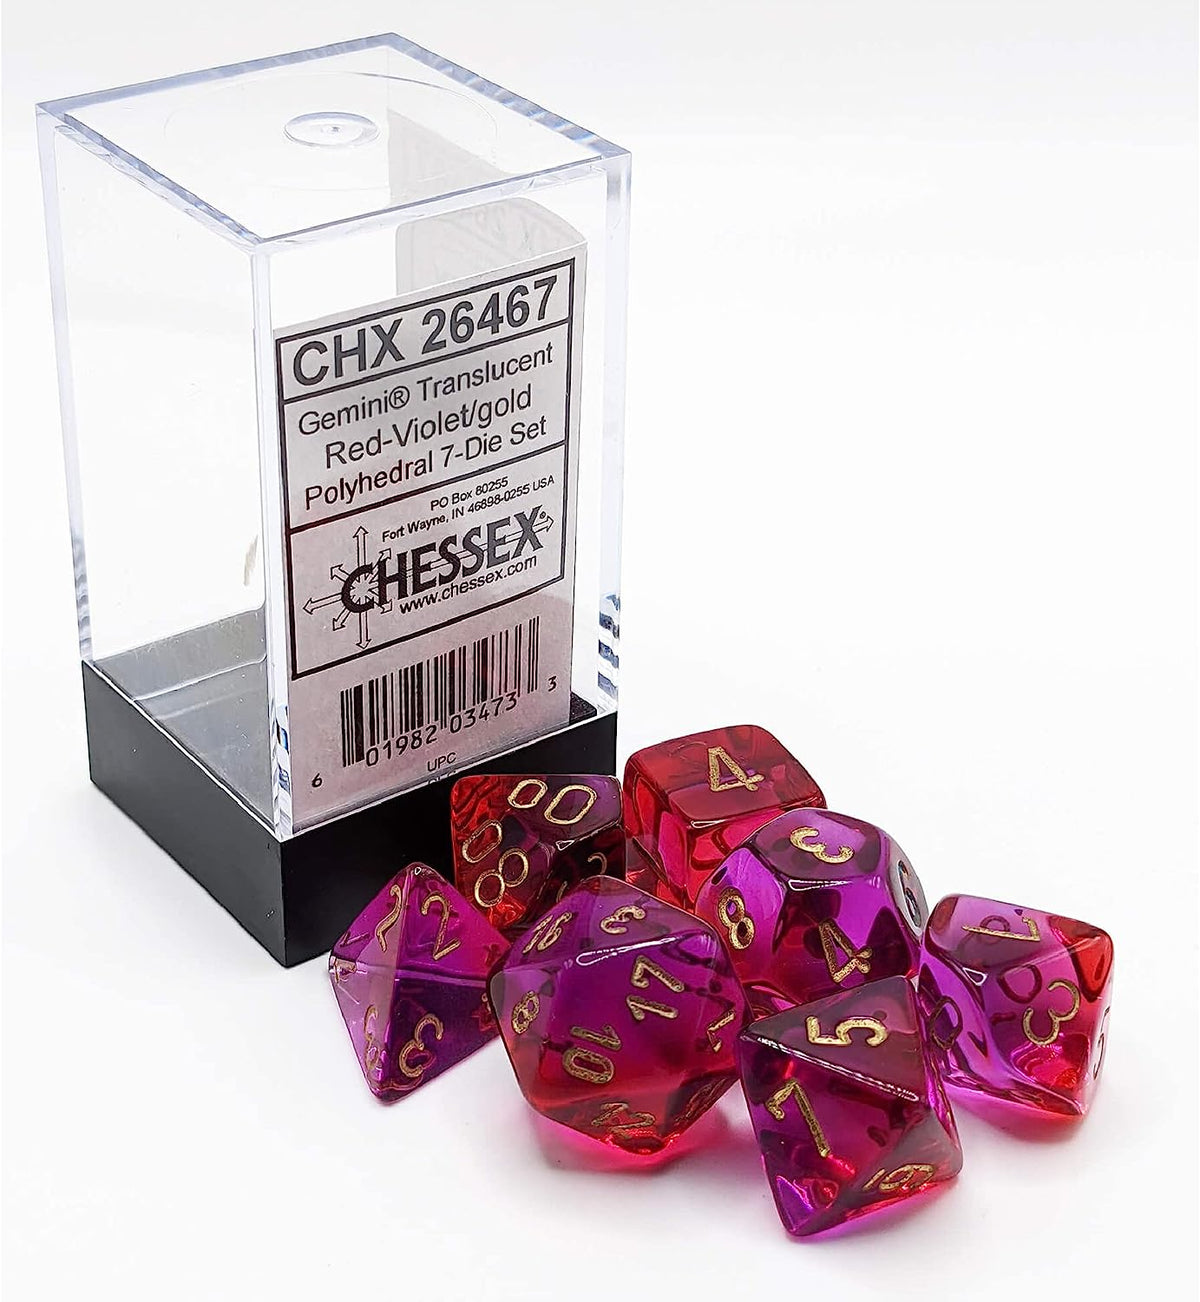 CHX 26467 Gemini Translucent Red-Violet/Gold Luminary Polyhedral 7-Die Set